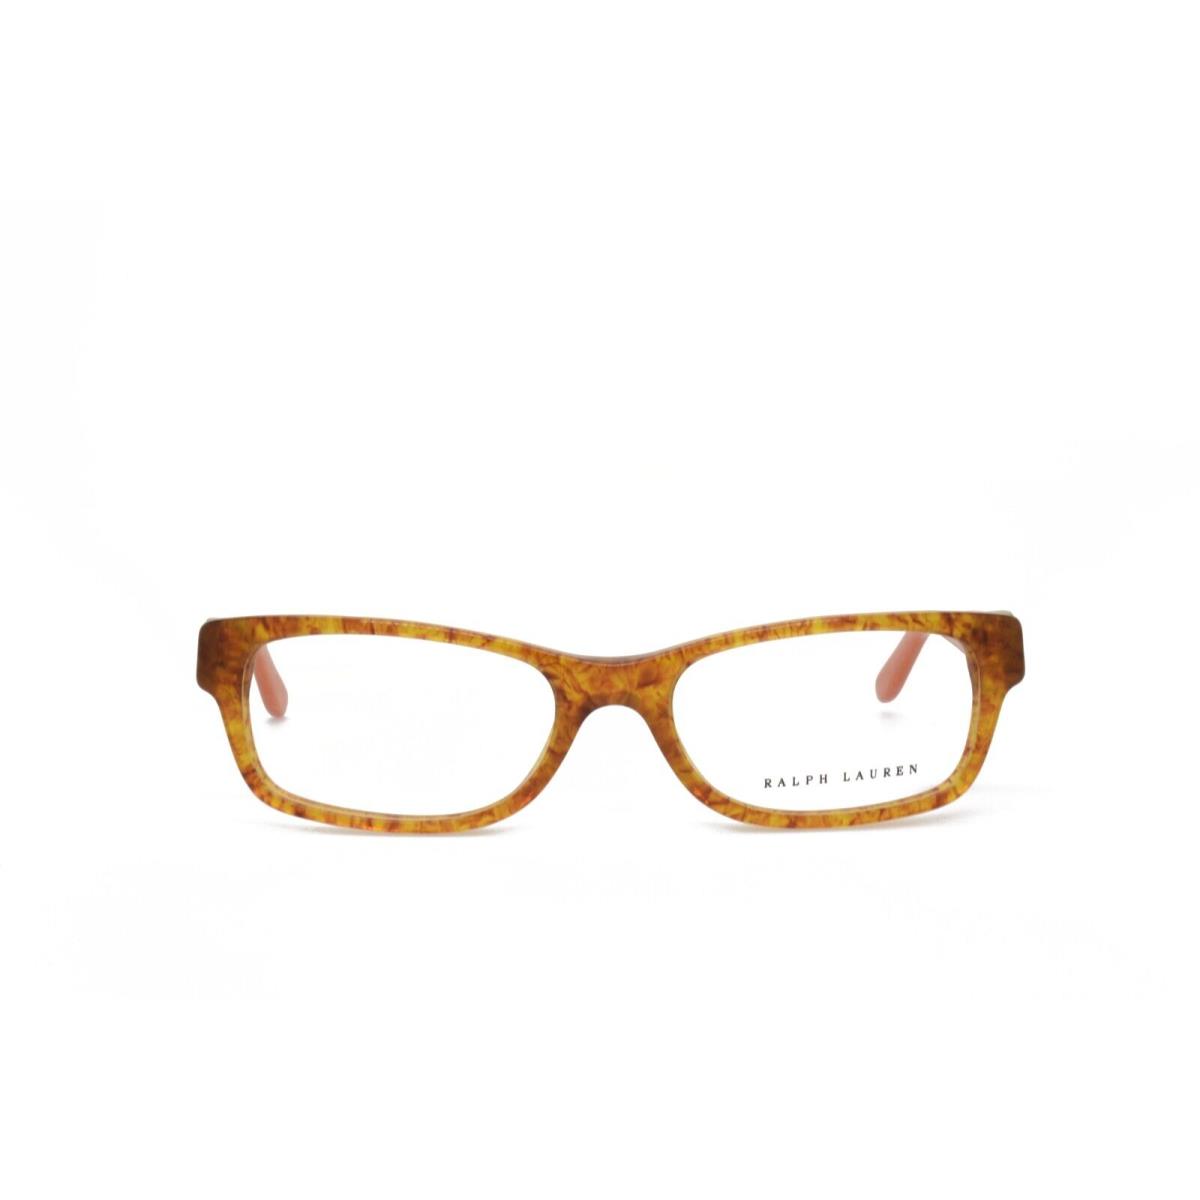 Ralph Lauren 6106Q 5354 51-17-140 Brown Orange Eyeglasses Frames